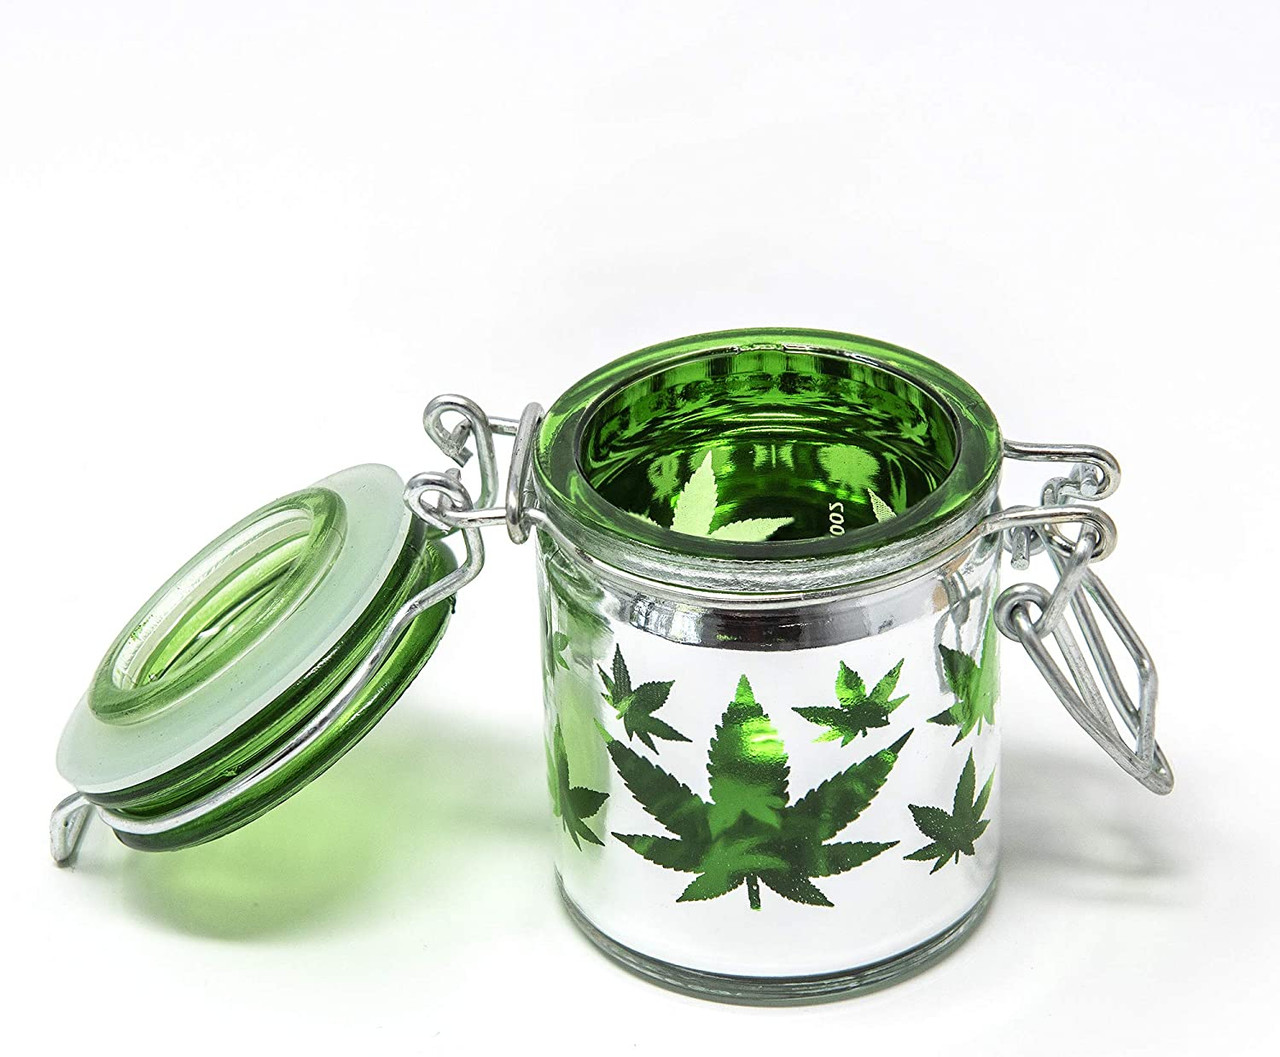 Airtight Glass Mini Stash Jar 1.5 Oz - Ku 'Kush' Design - The